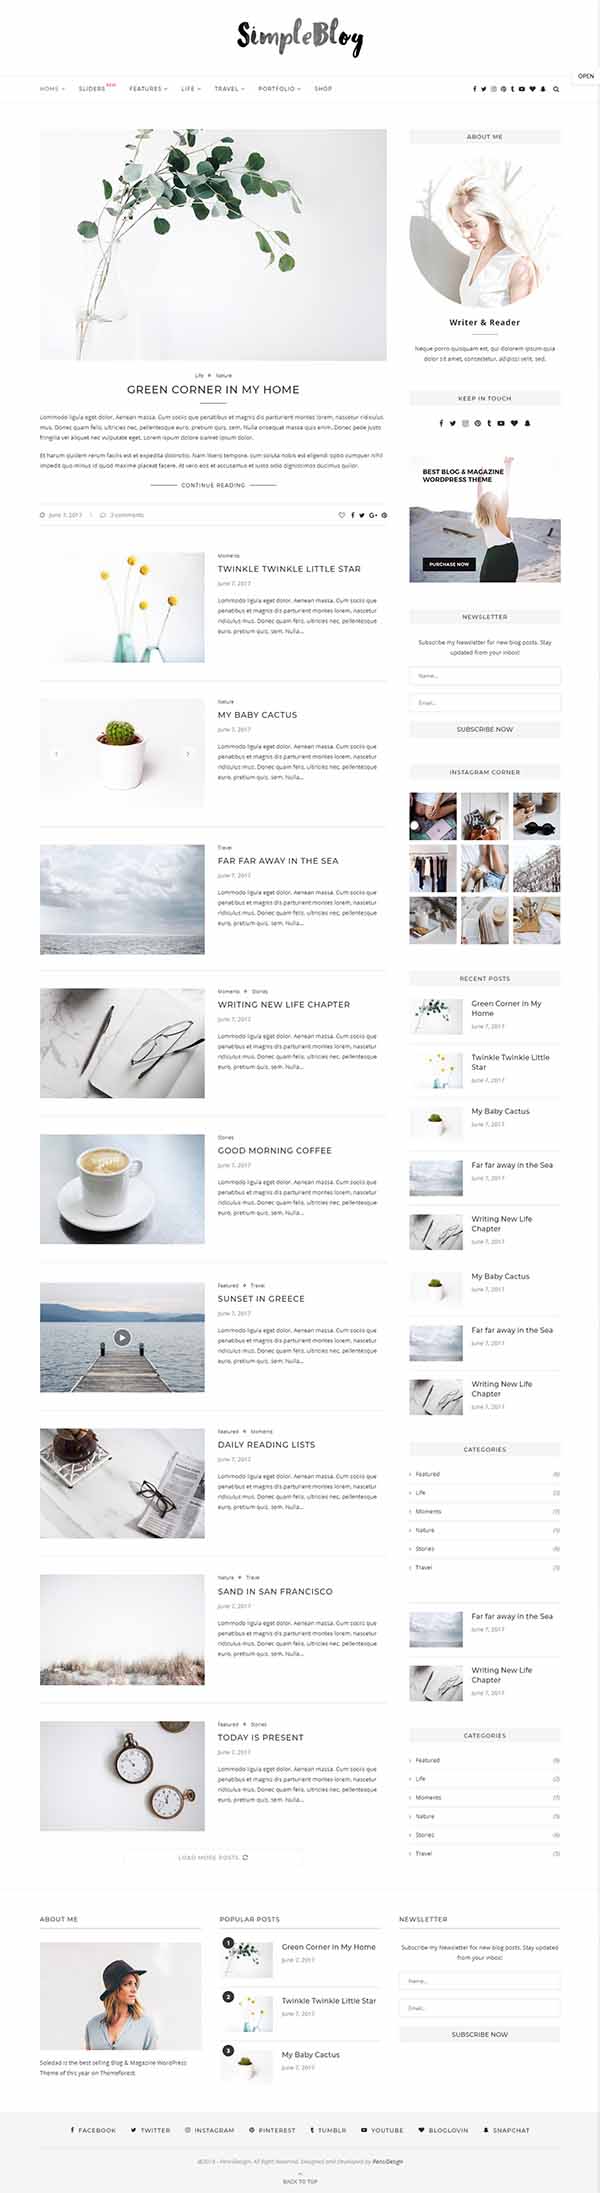 Soledad - Multi-Concept Blog Magazine WordPress Theme